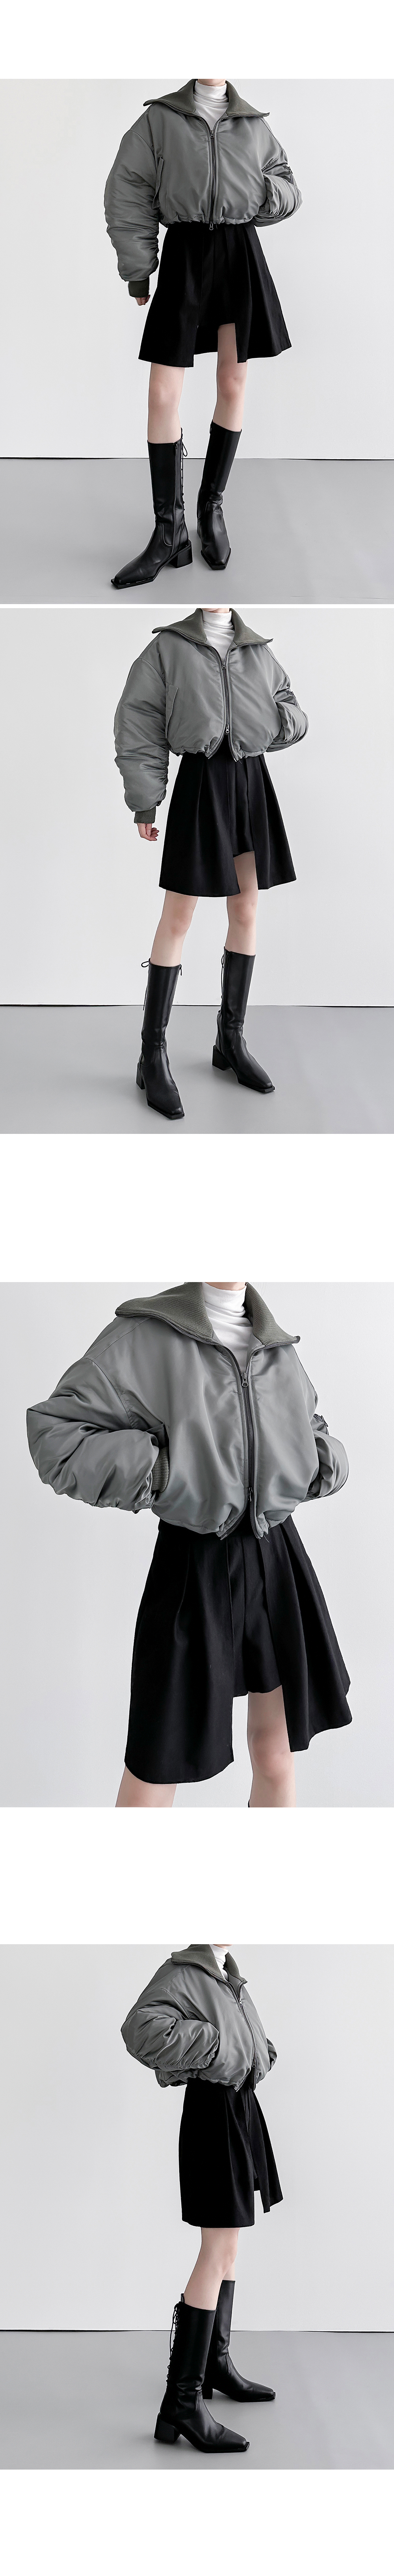 jacket grey color image-S1L5